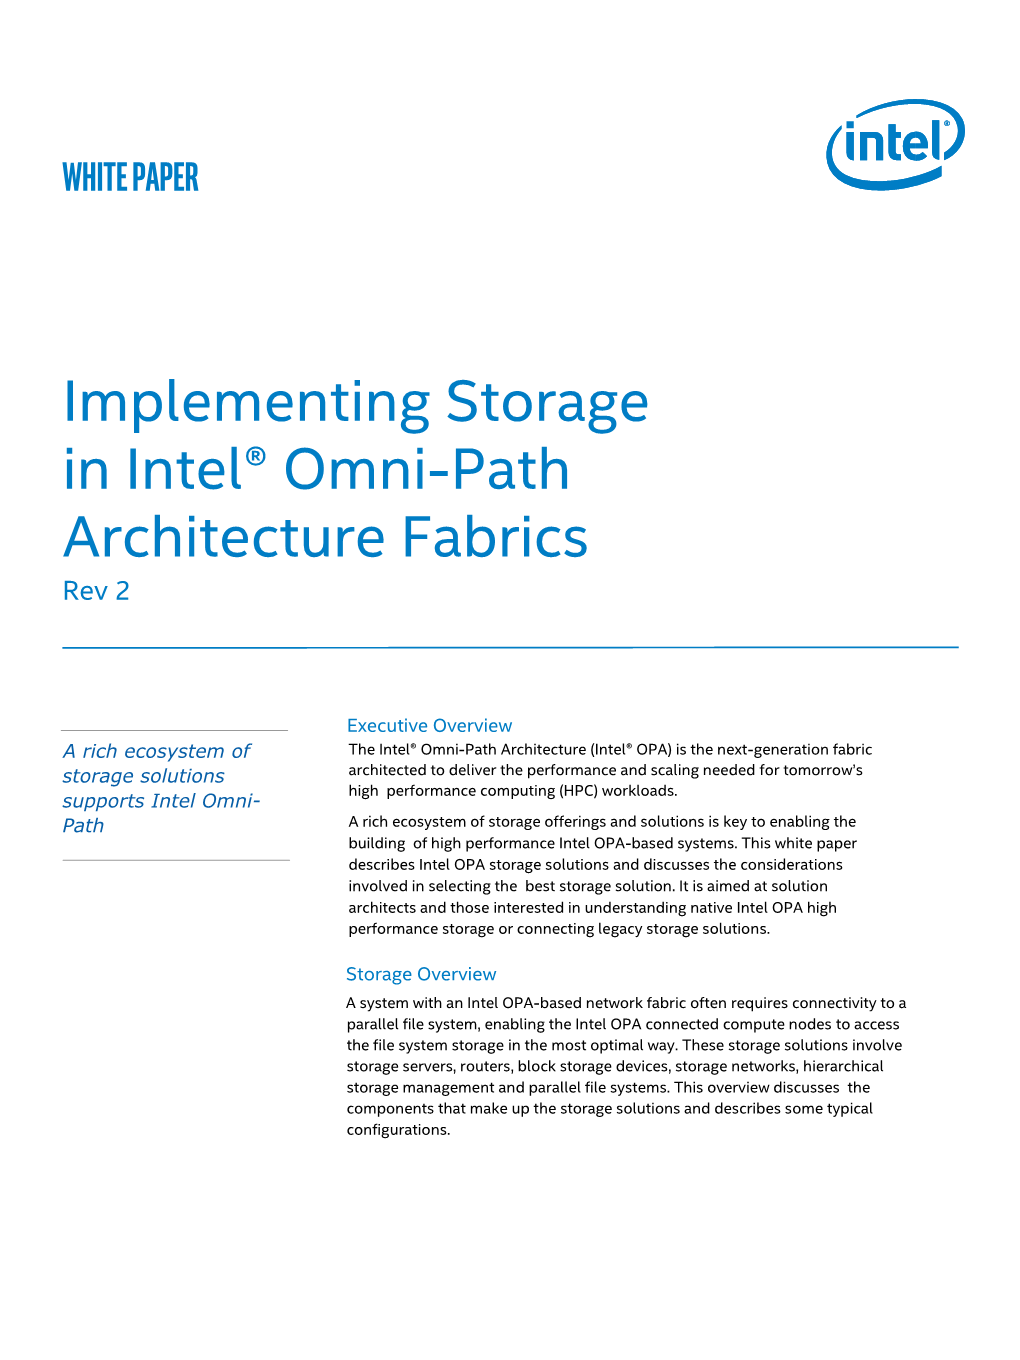 Implementing Intel® Omni-Path Architecture Storage